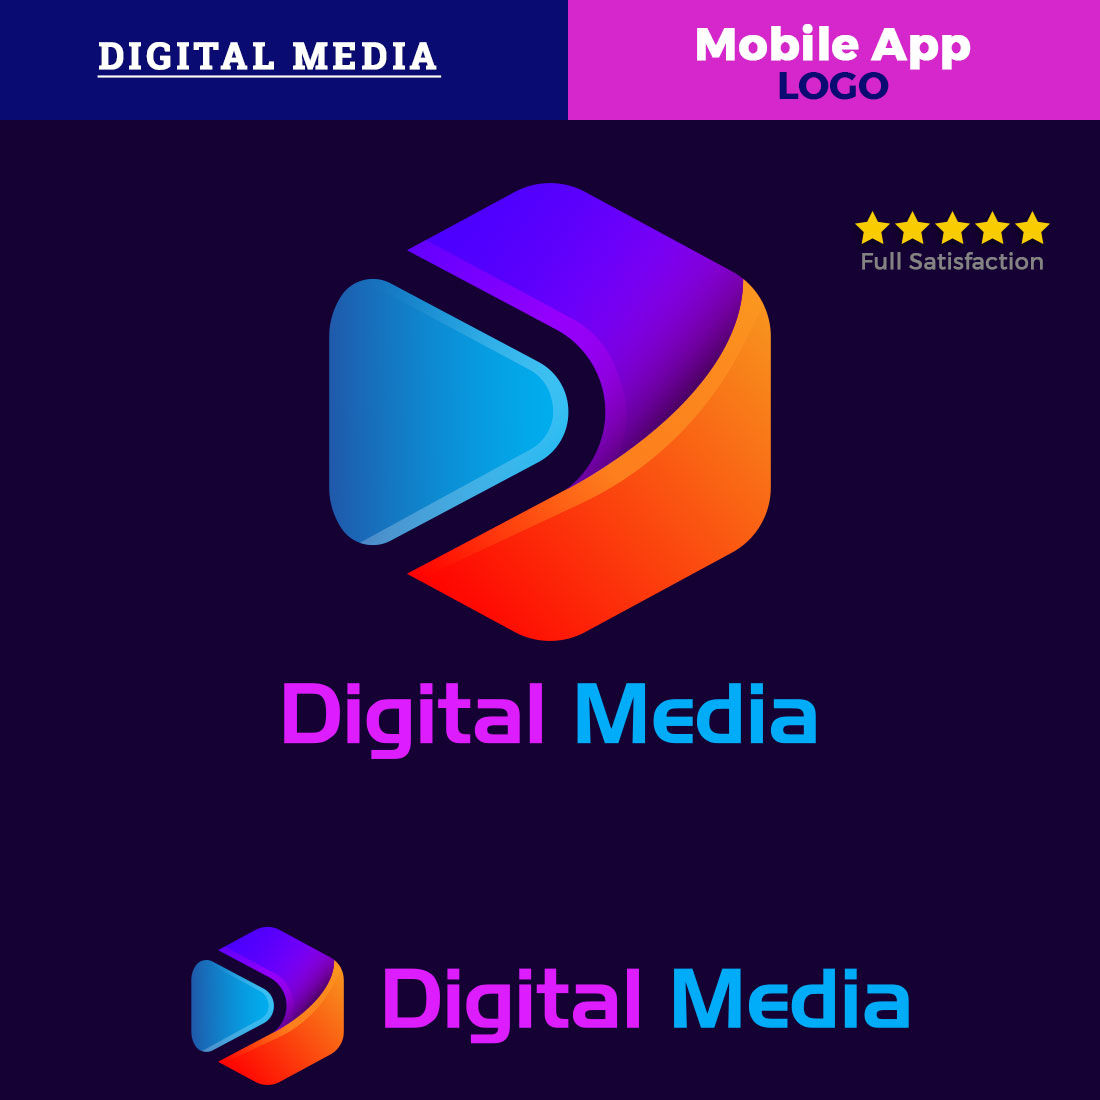 Digital Media Mobile App Logo Design cover image.